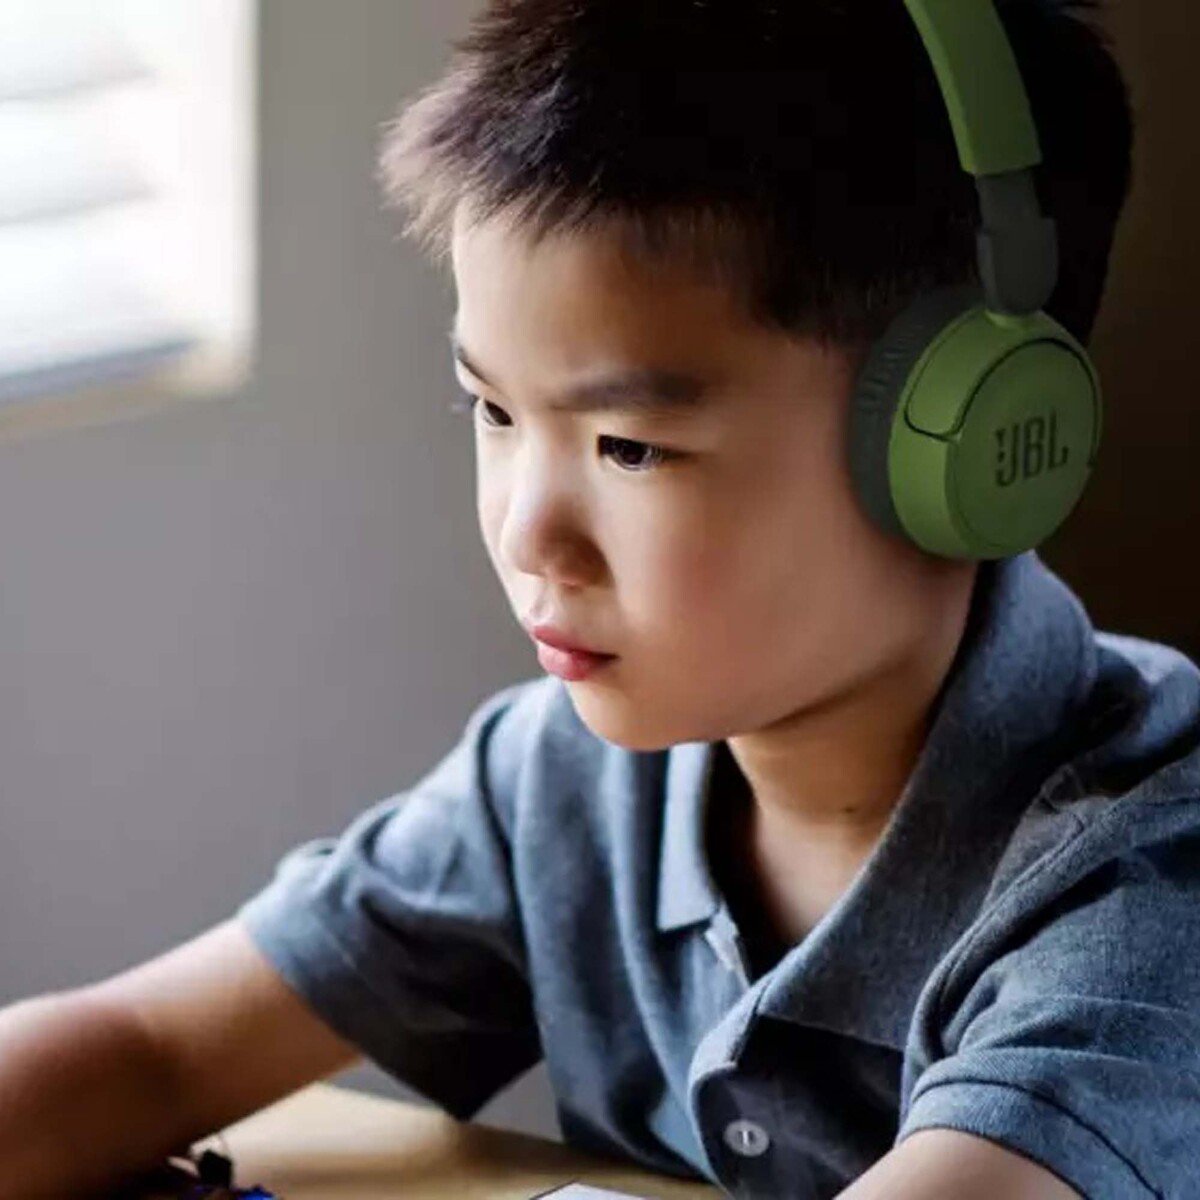 JBL Wireless Kids Headphone JR310BT Green